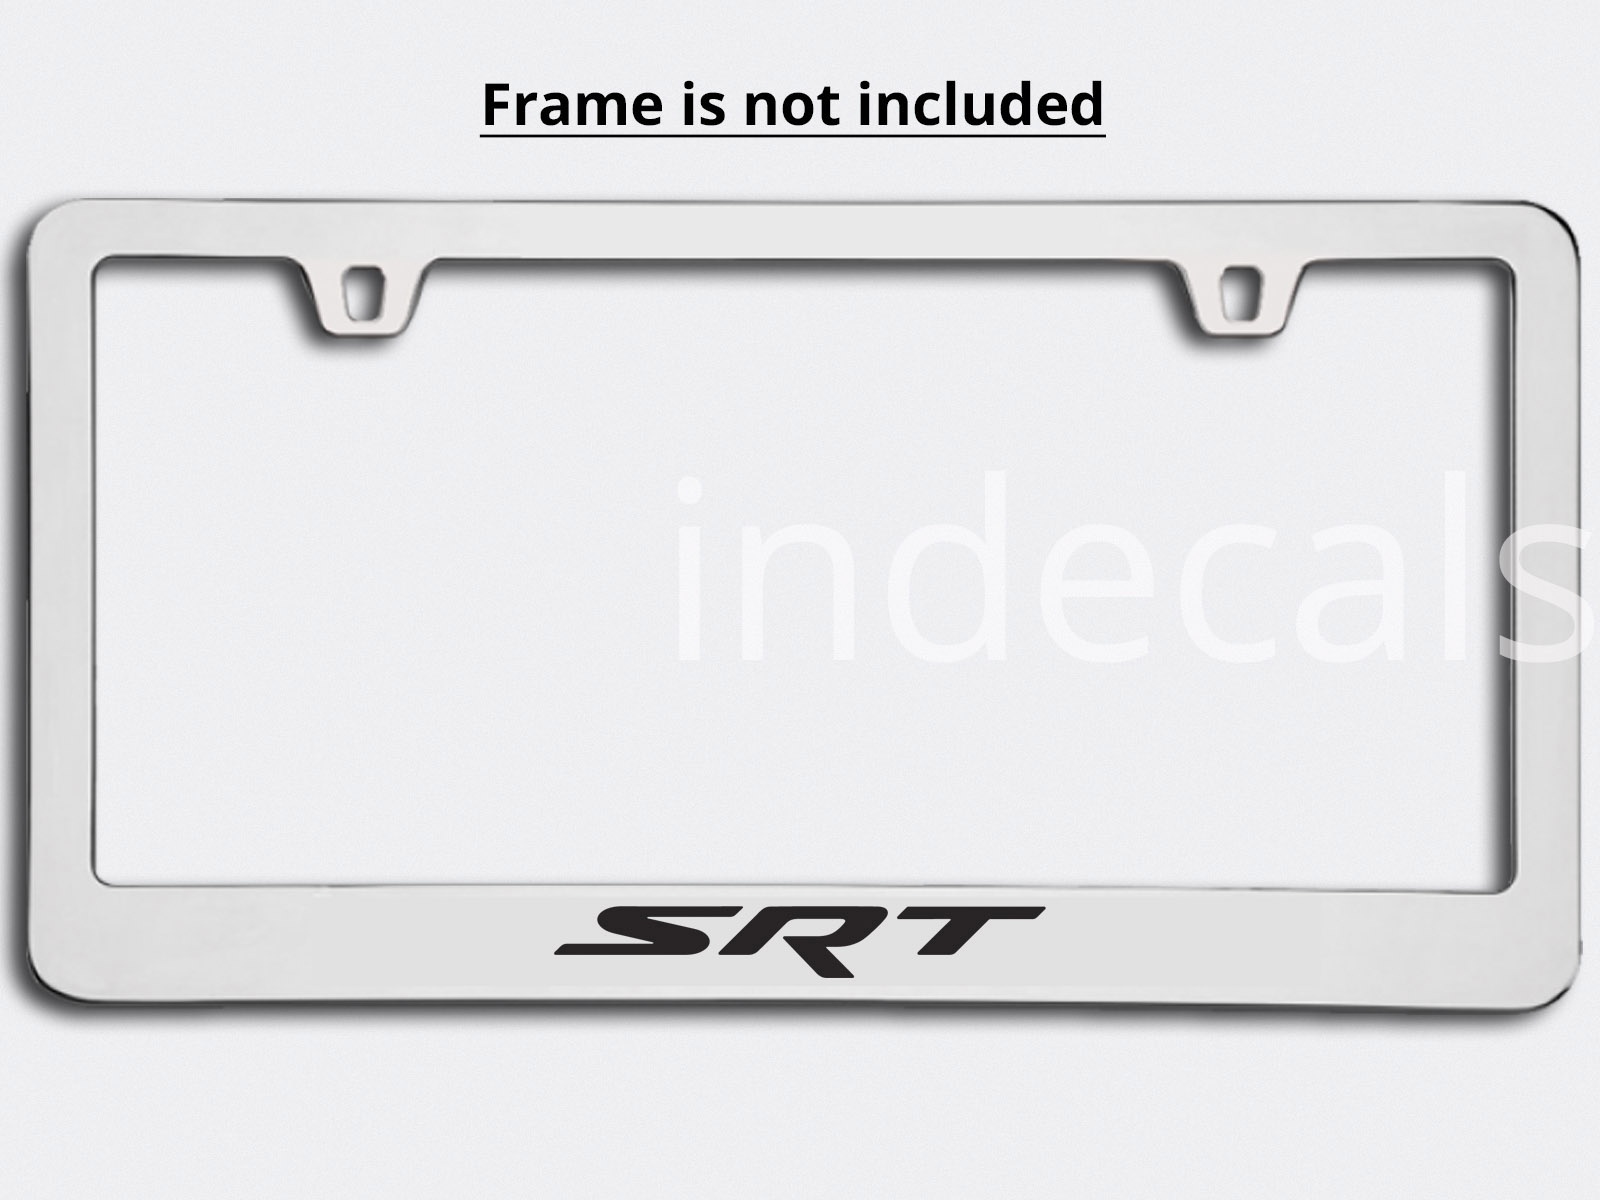 3 x Dodge SRT Stickers for License Plate Frame - Black